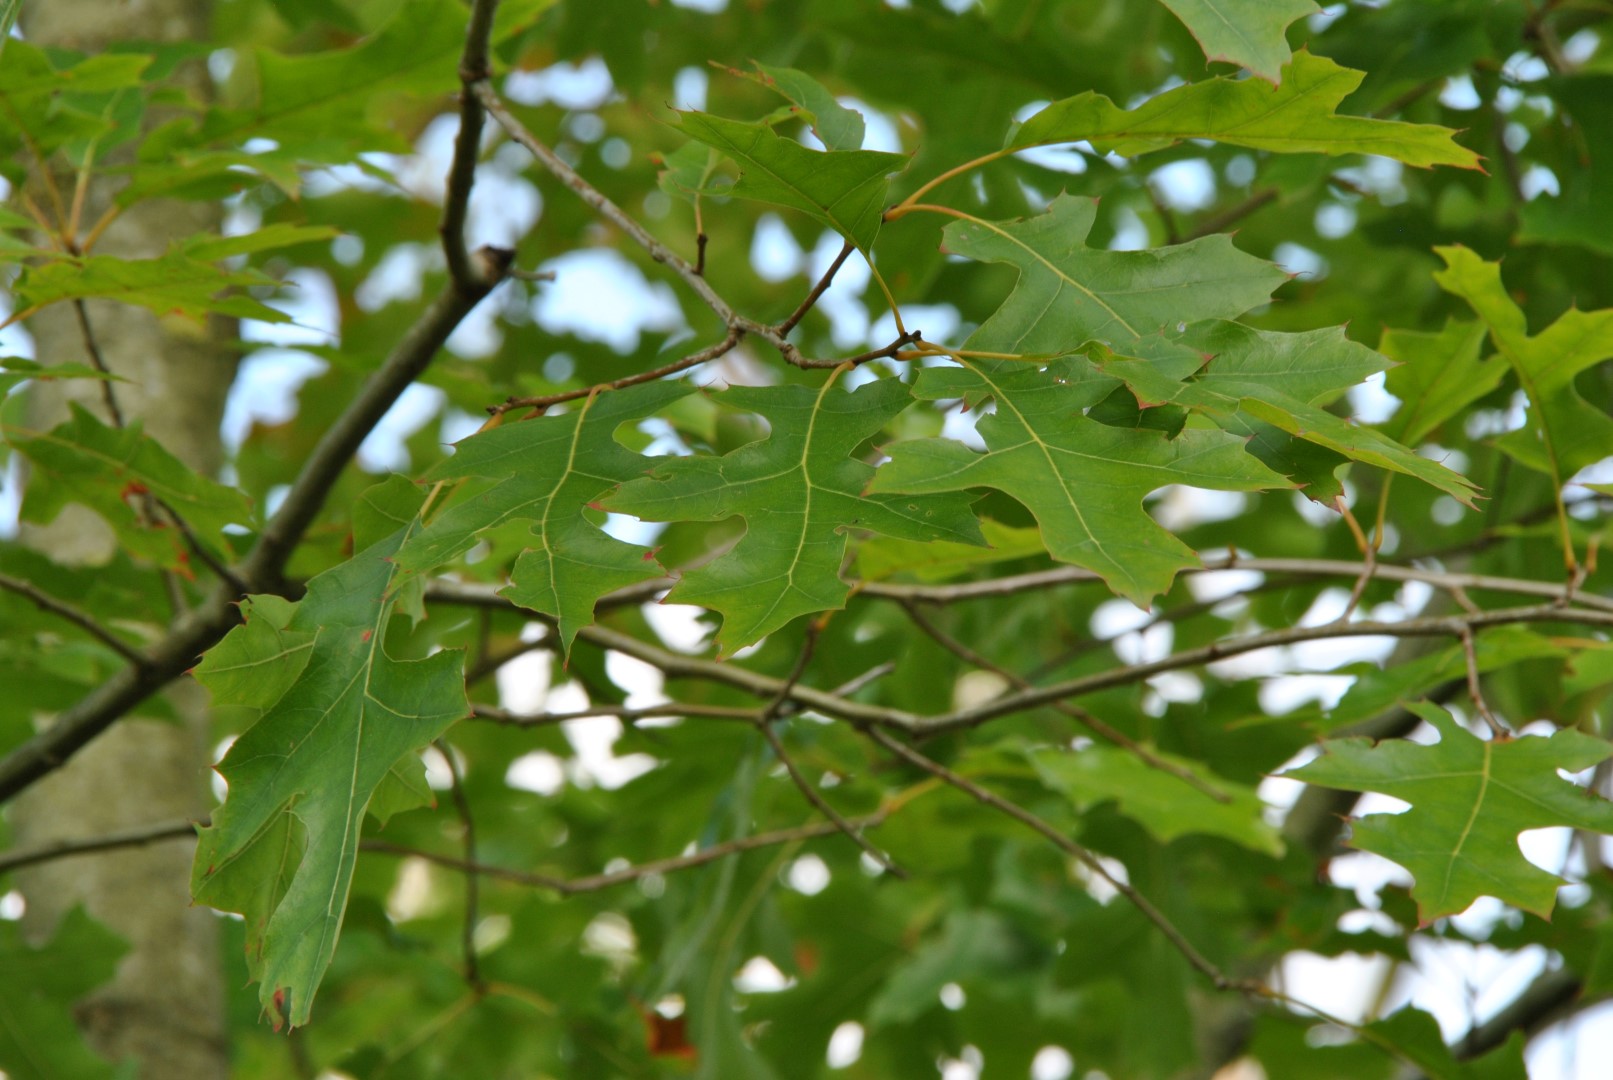 Quercus hartwissiana